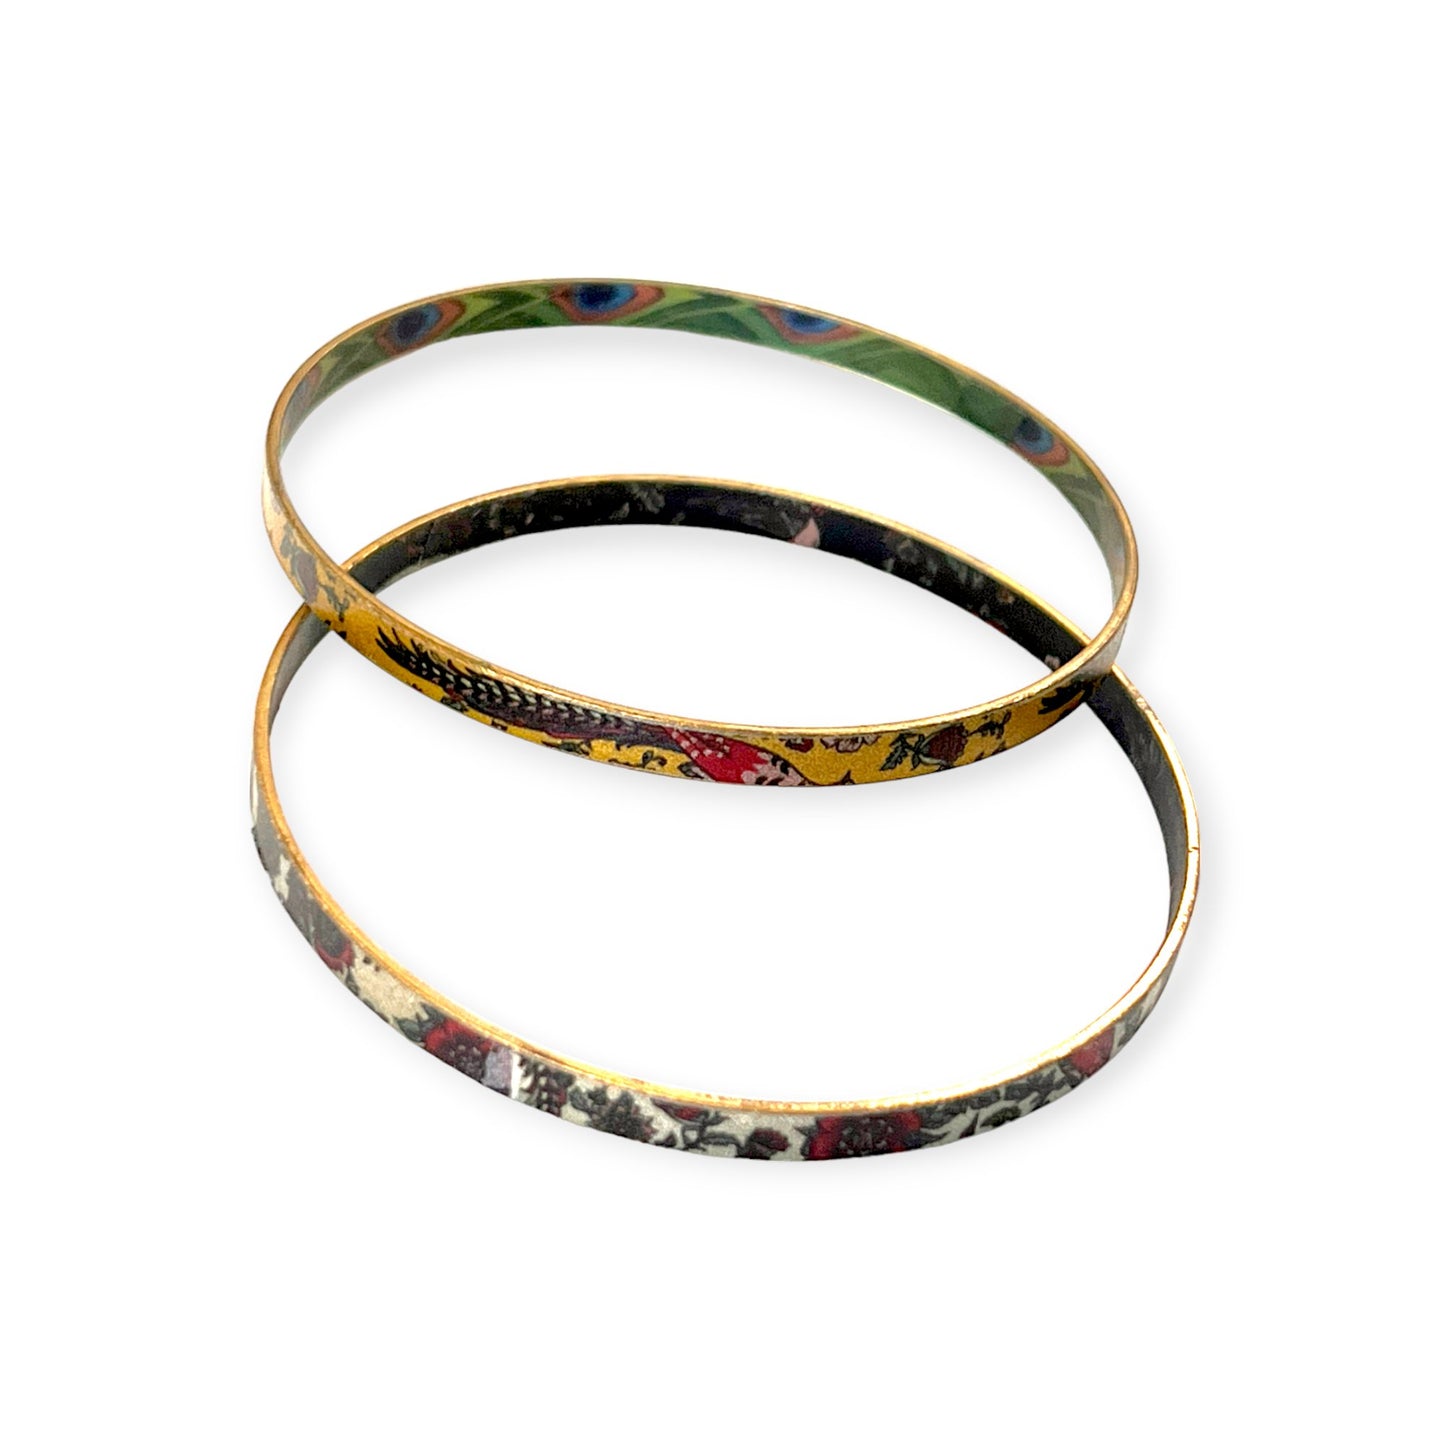 Pair of globally travel inspired bangle bracelets - Sundara Joon